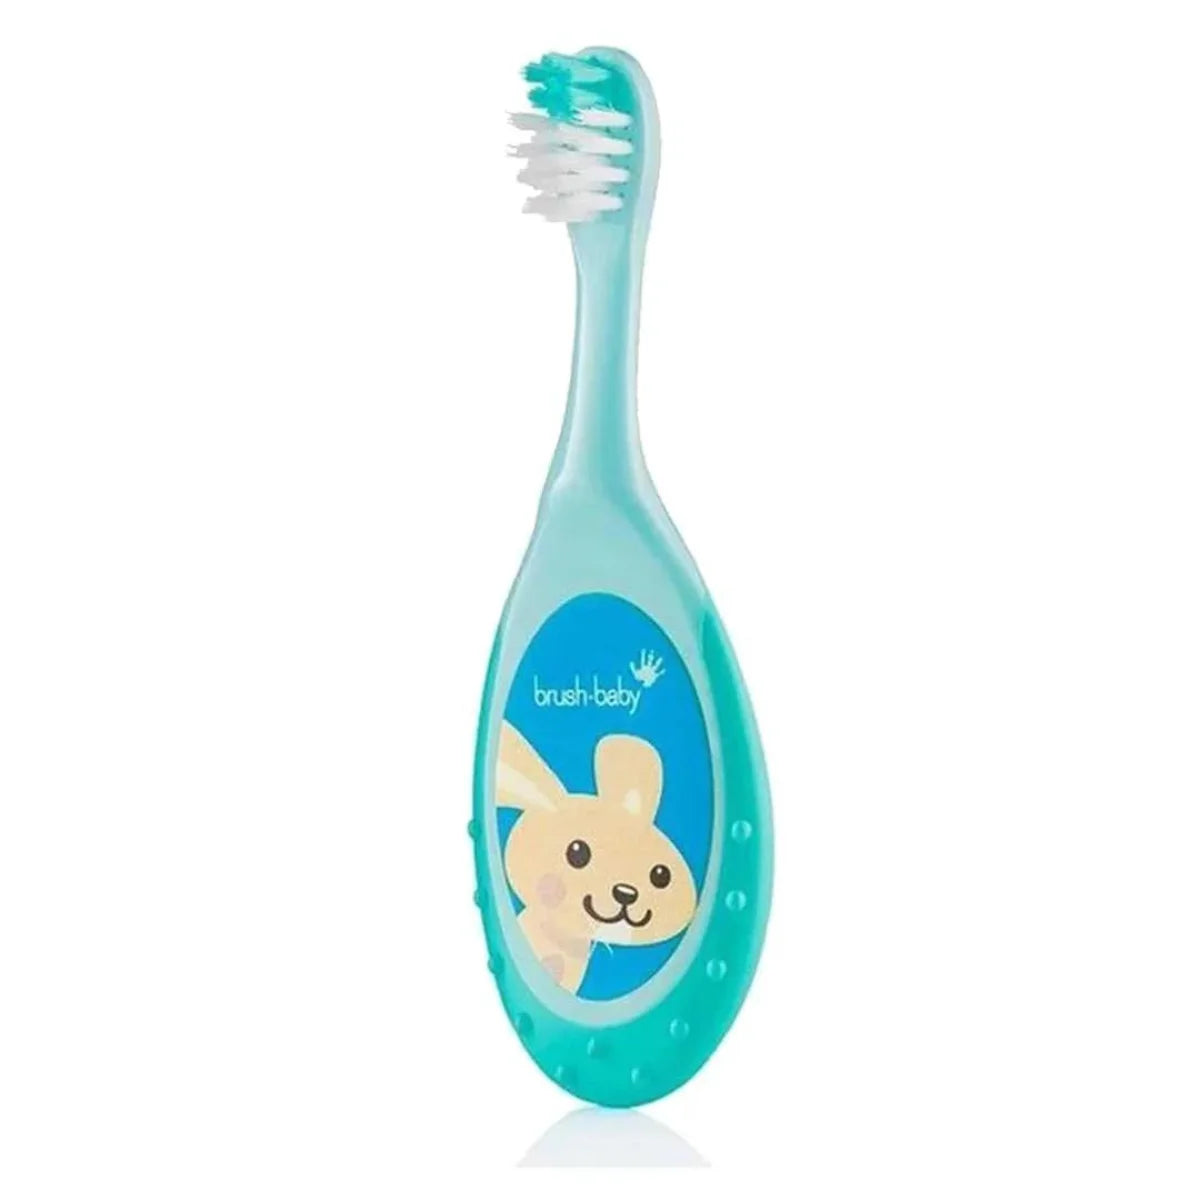 0-3 years flossbrush bristles toothbrush in teal